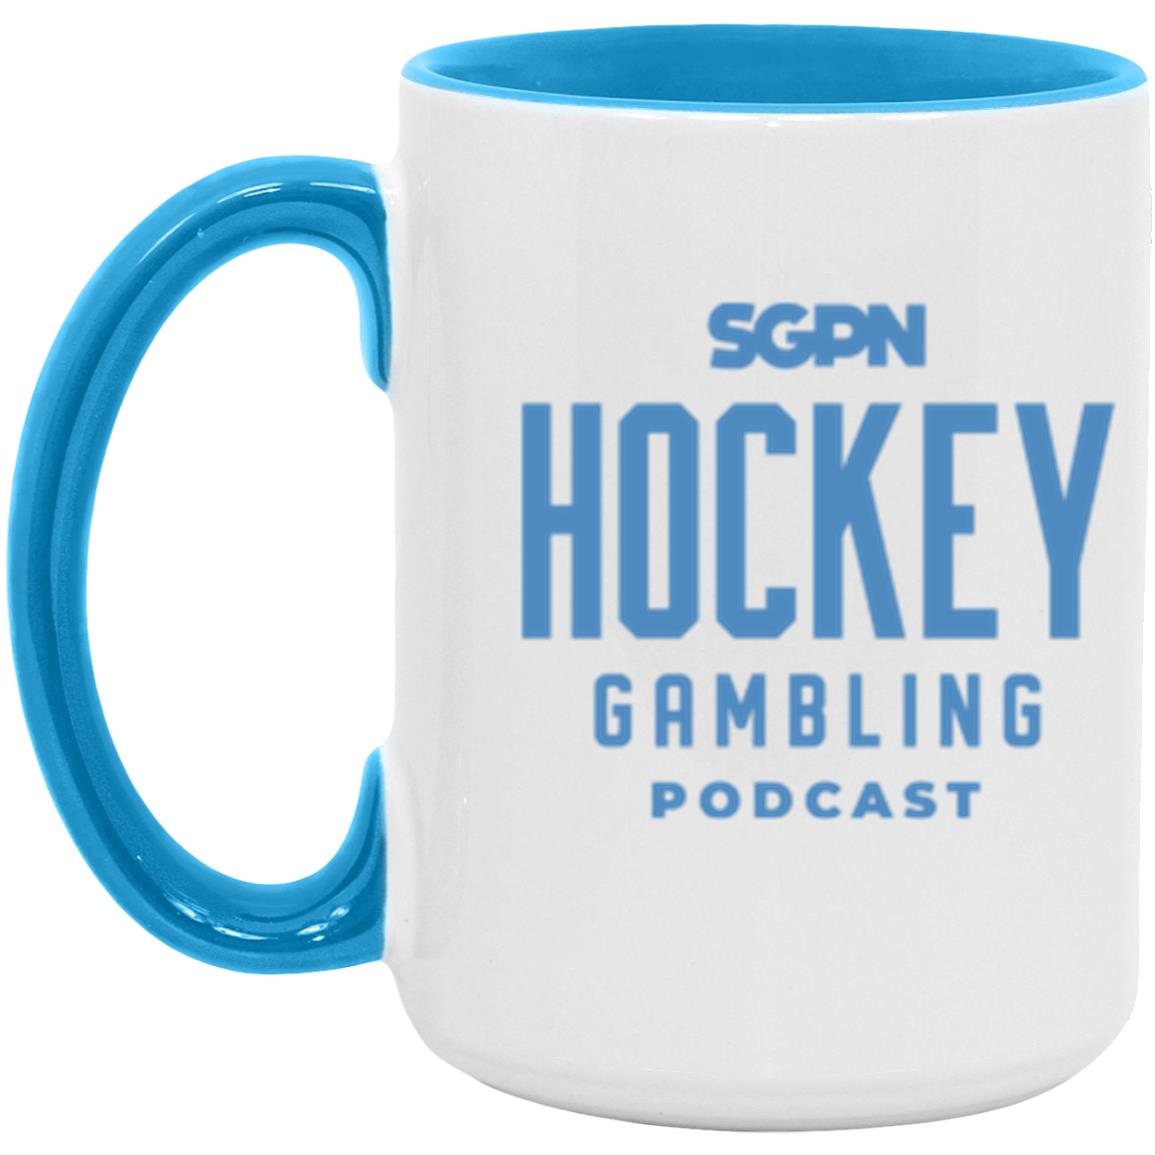 Hockey Gambling Podcast 15oz. Accent Mug